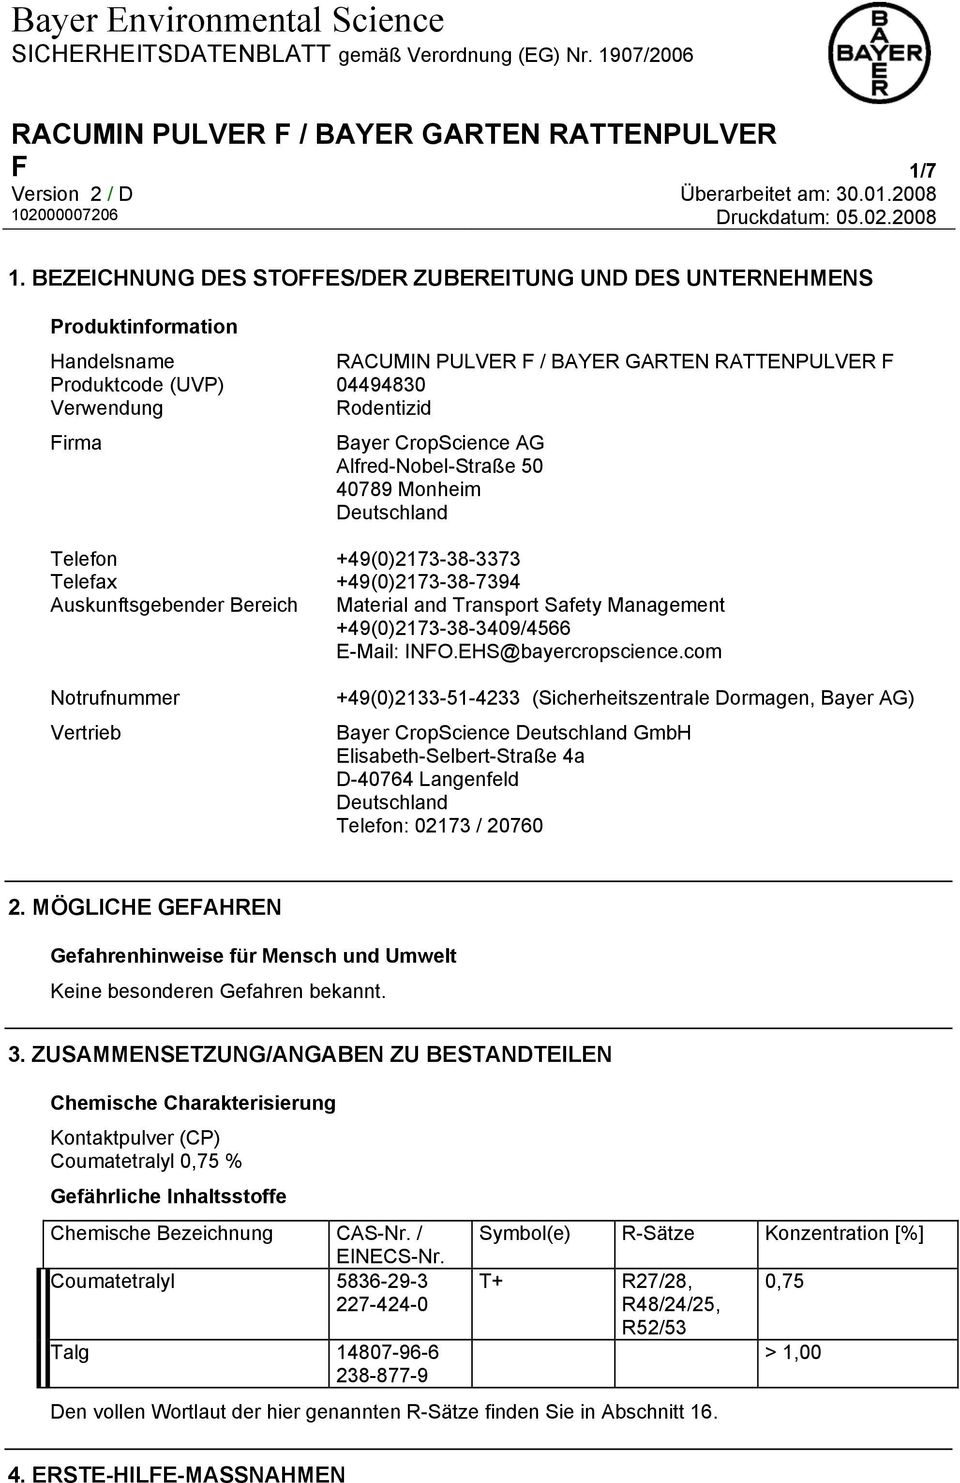 Monheim Deutschland Telefon +49(0)2173-38-3373 Telefax +49(0)2173-38-7394 Auskunftsgebender Bereich Material and Transport Safety Management +49(0)2173-38-3409/4566 E-Mail: INFO.EHS@bayercropscience.